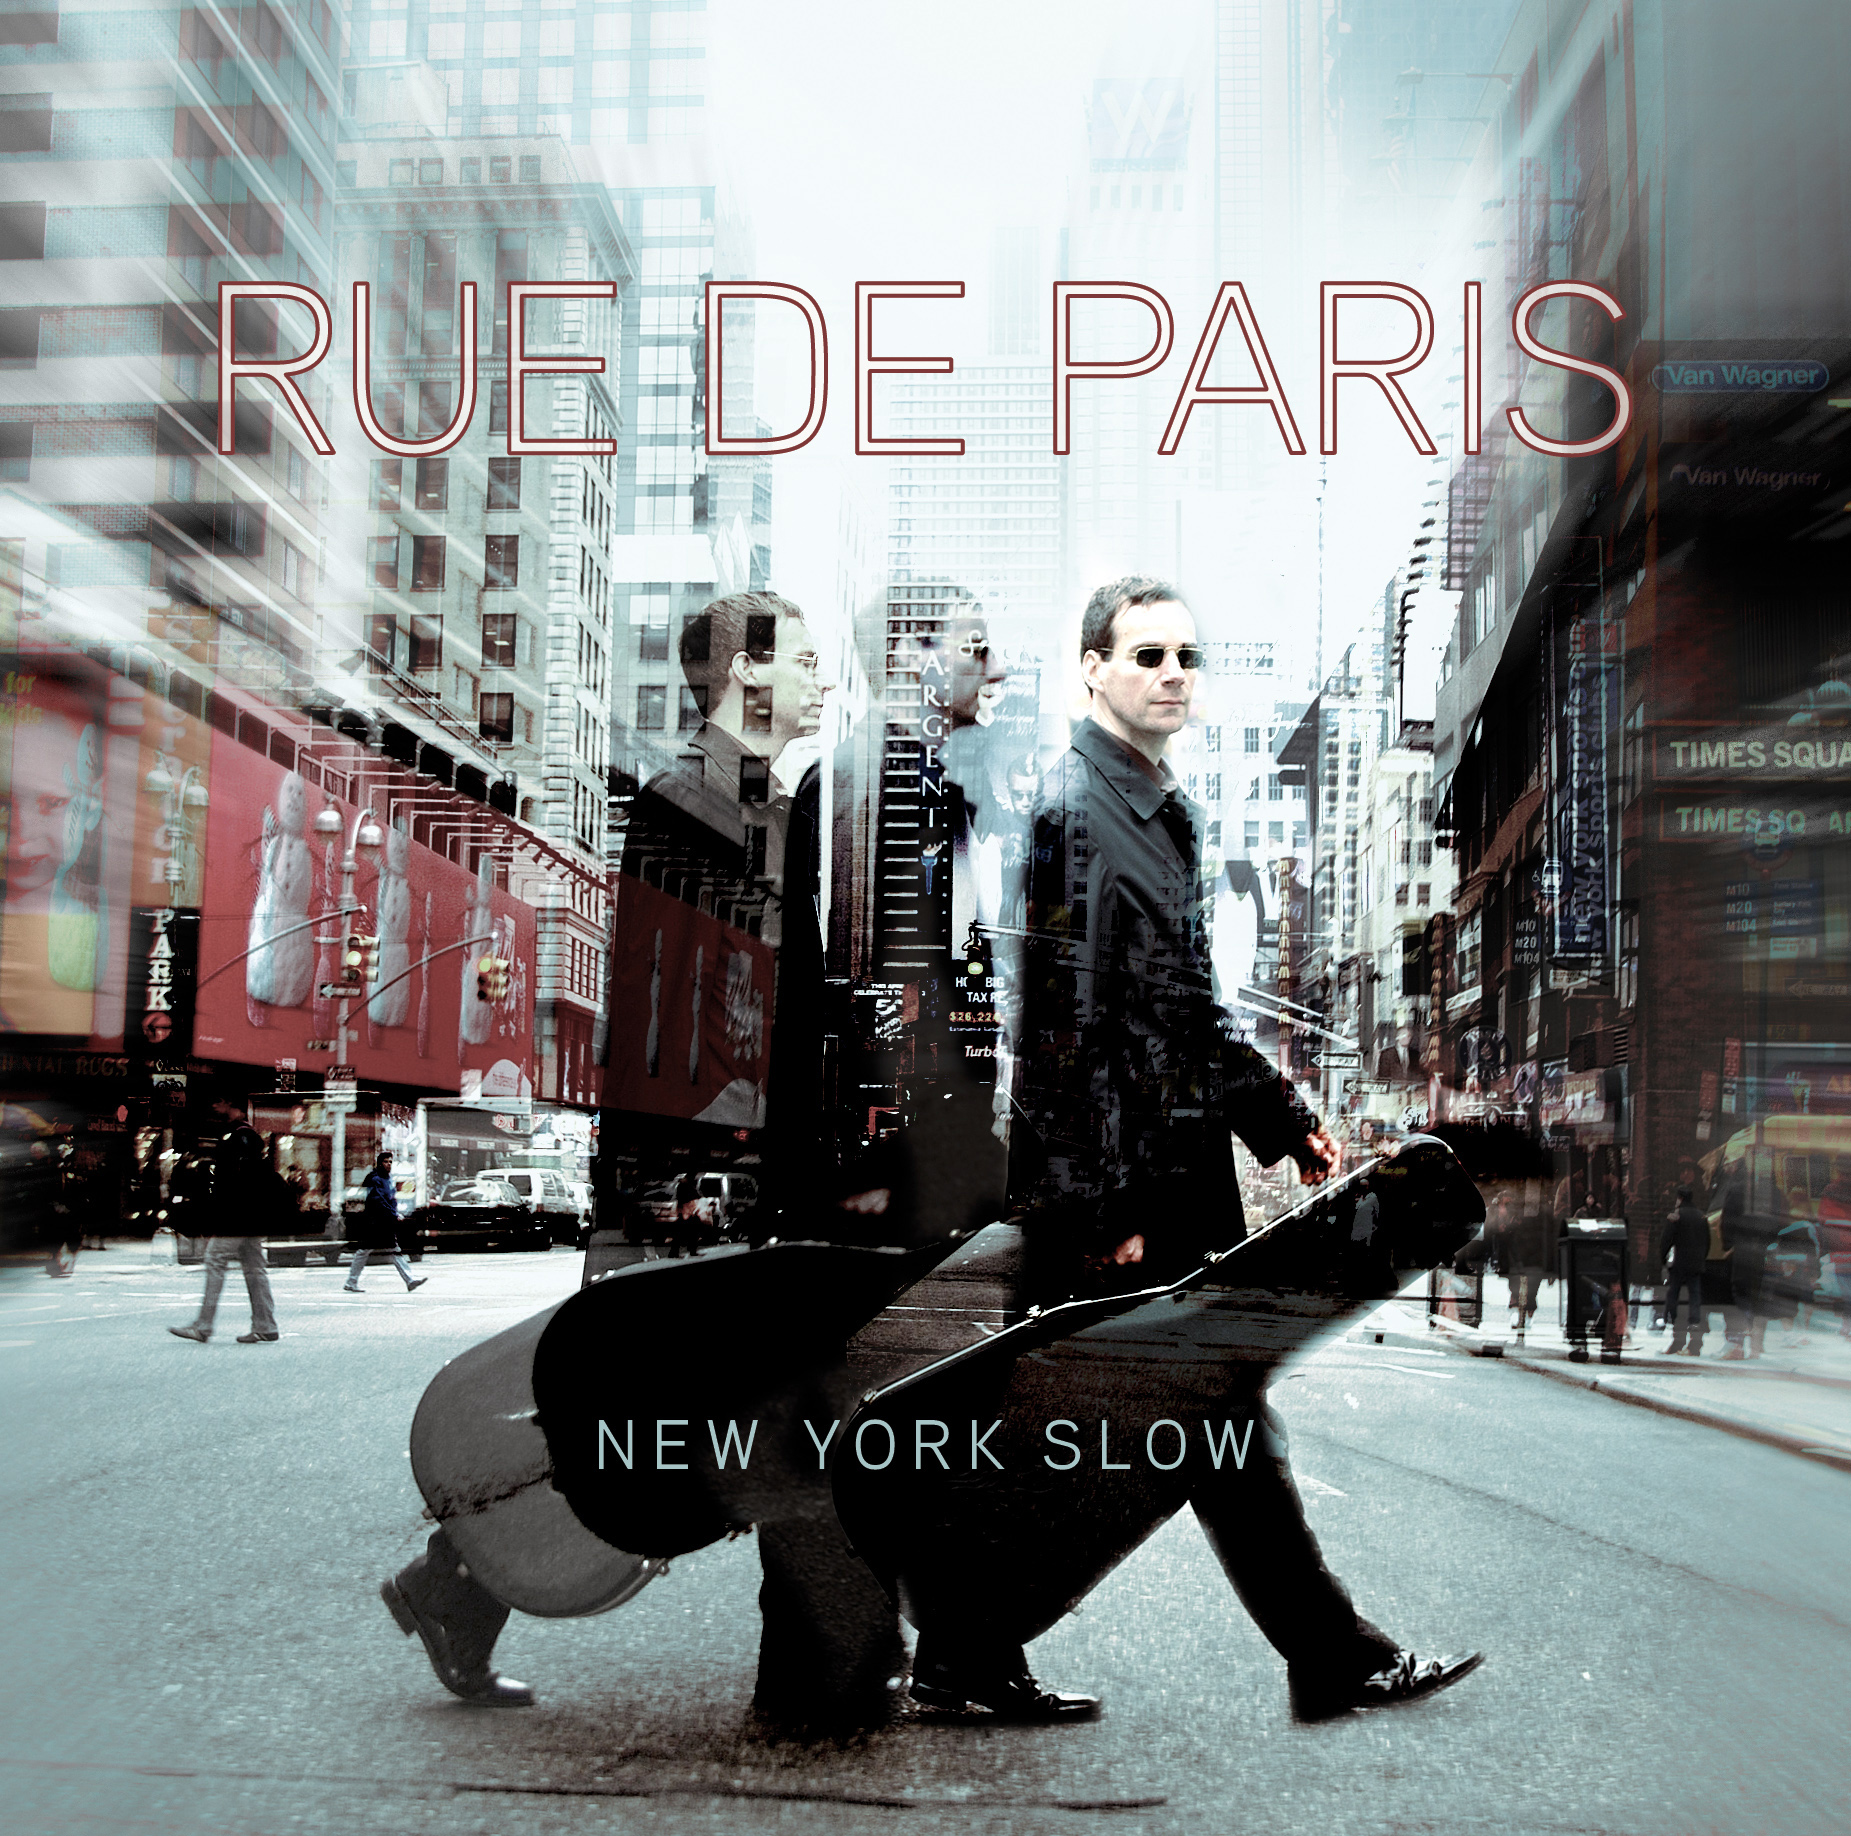 Rue Protzer - New York Slow